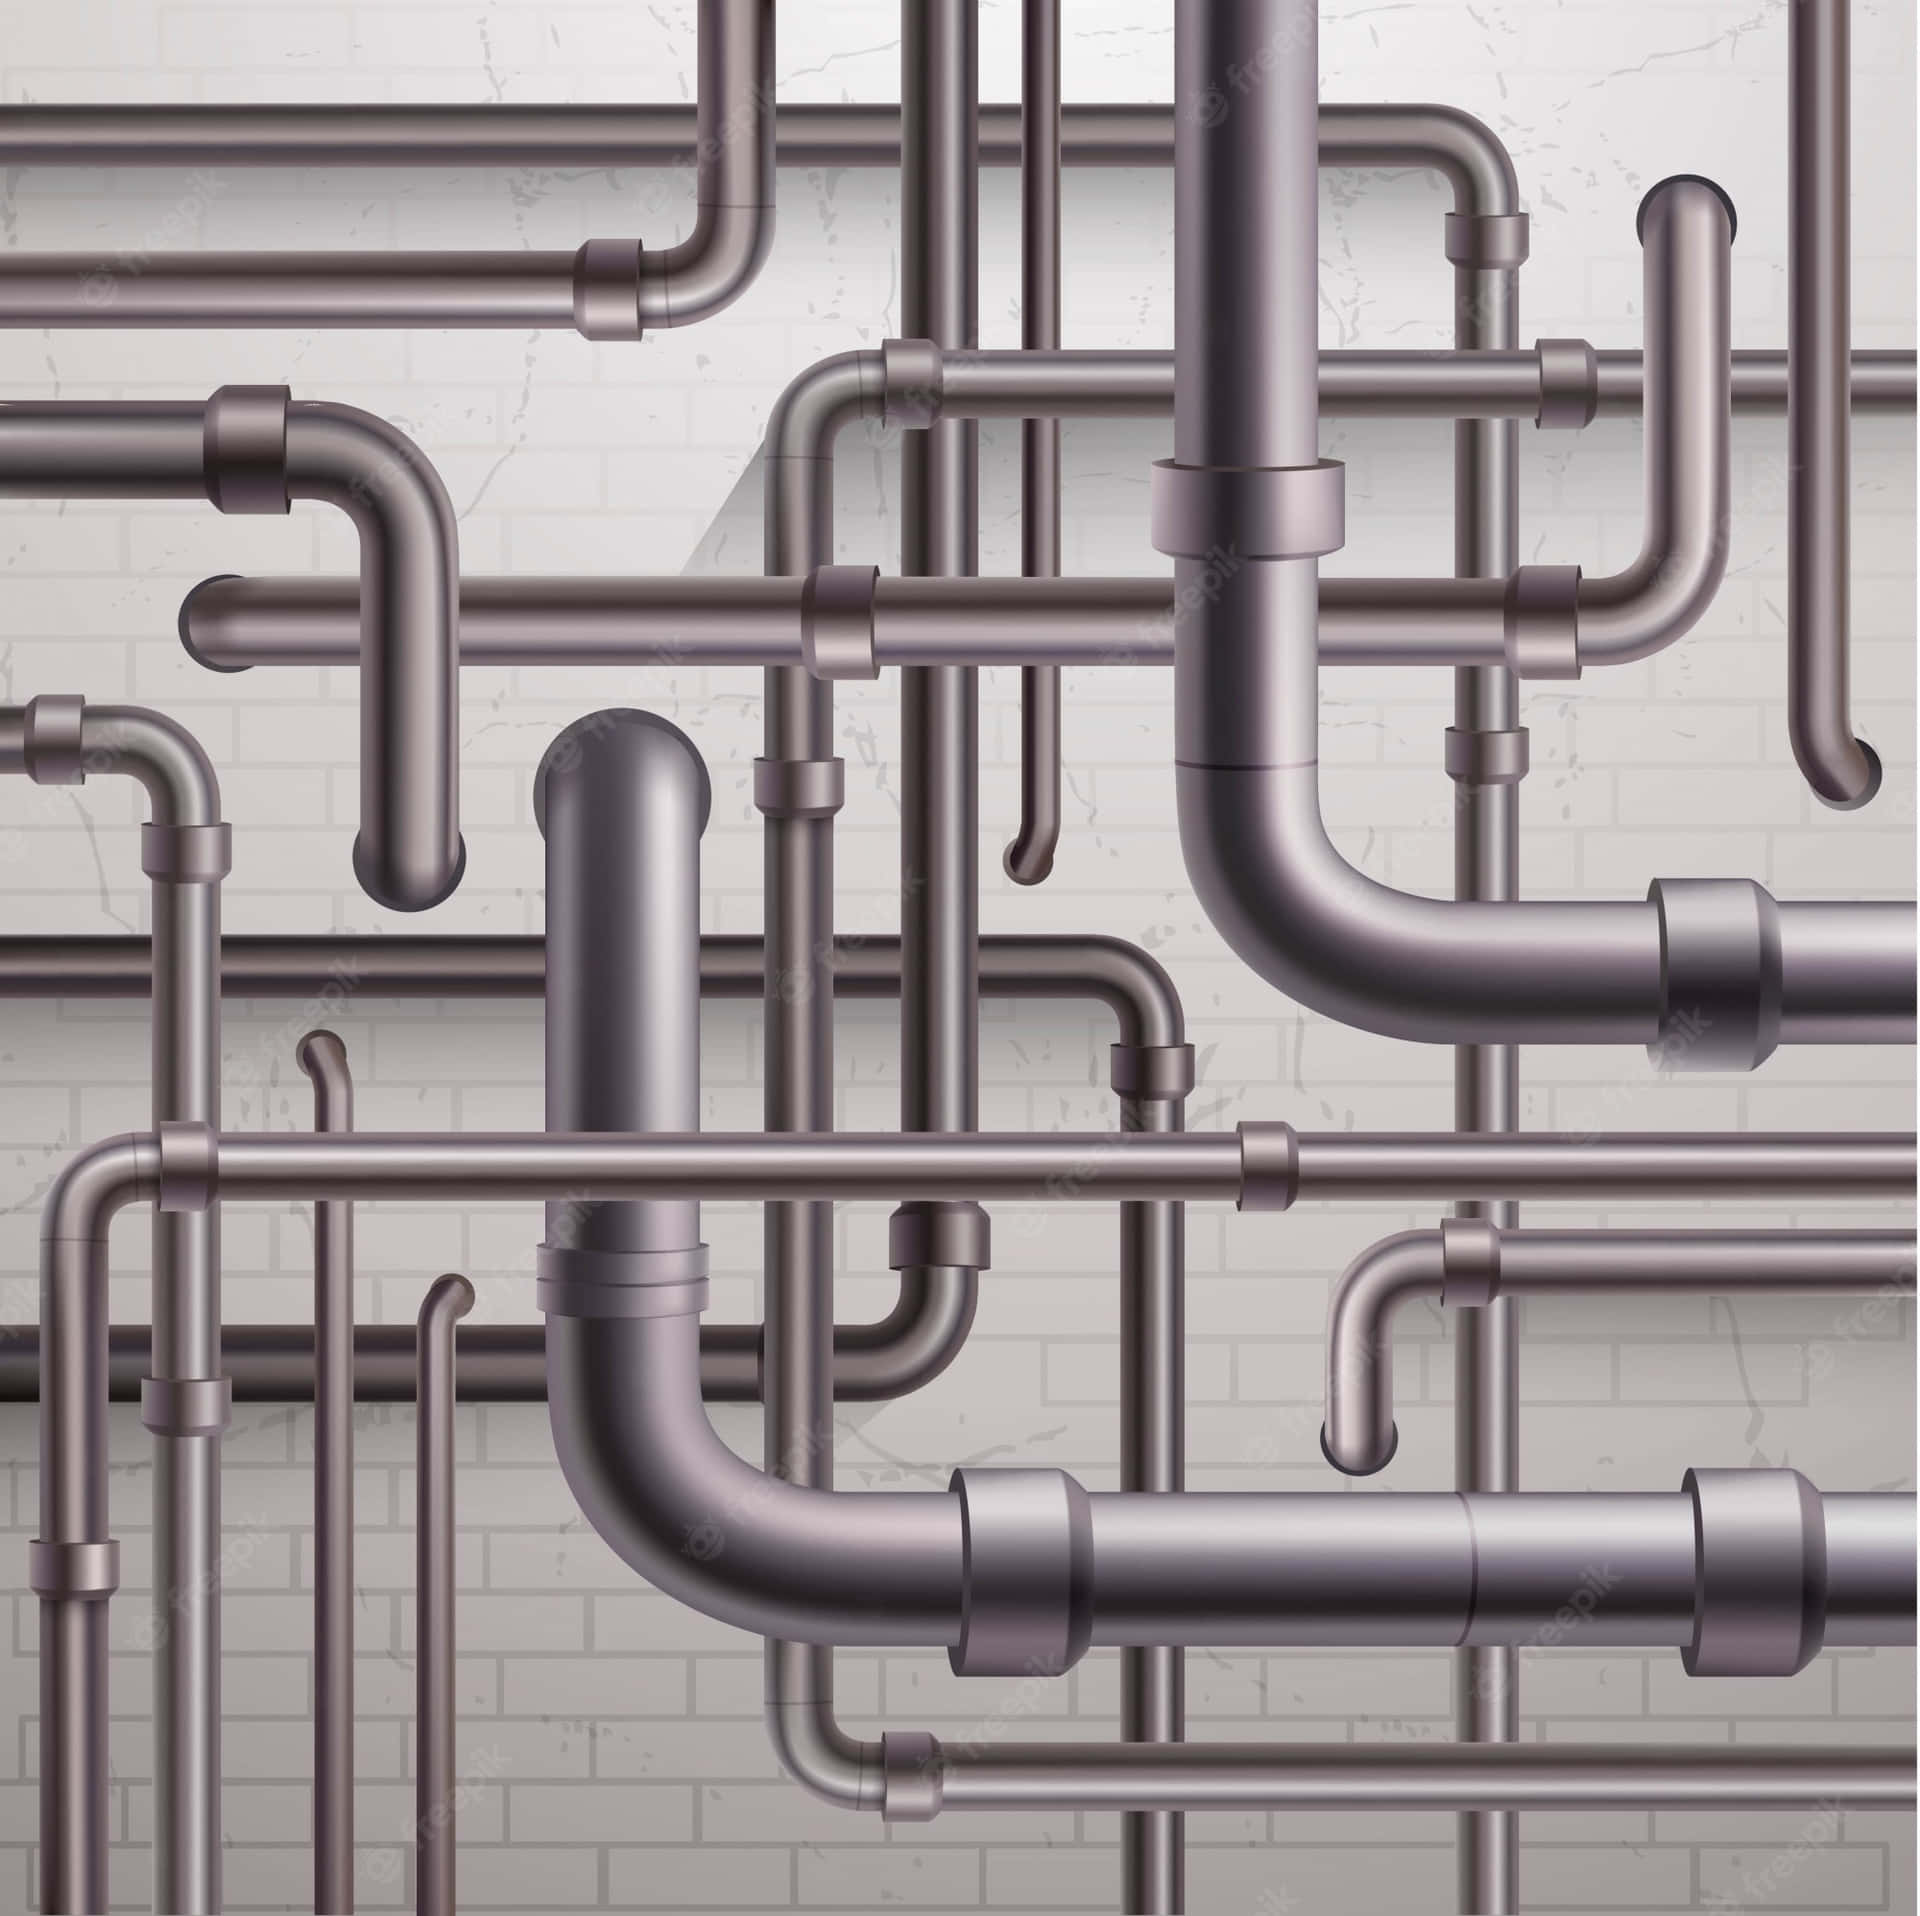 Digital Pipeline And Plumbing System Wallpaper